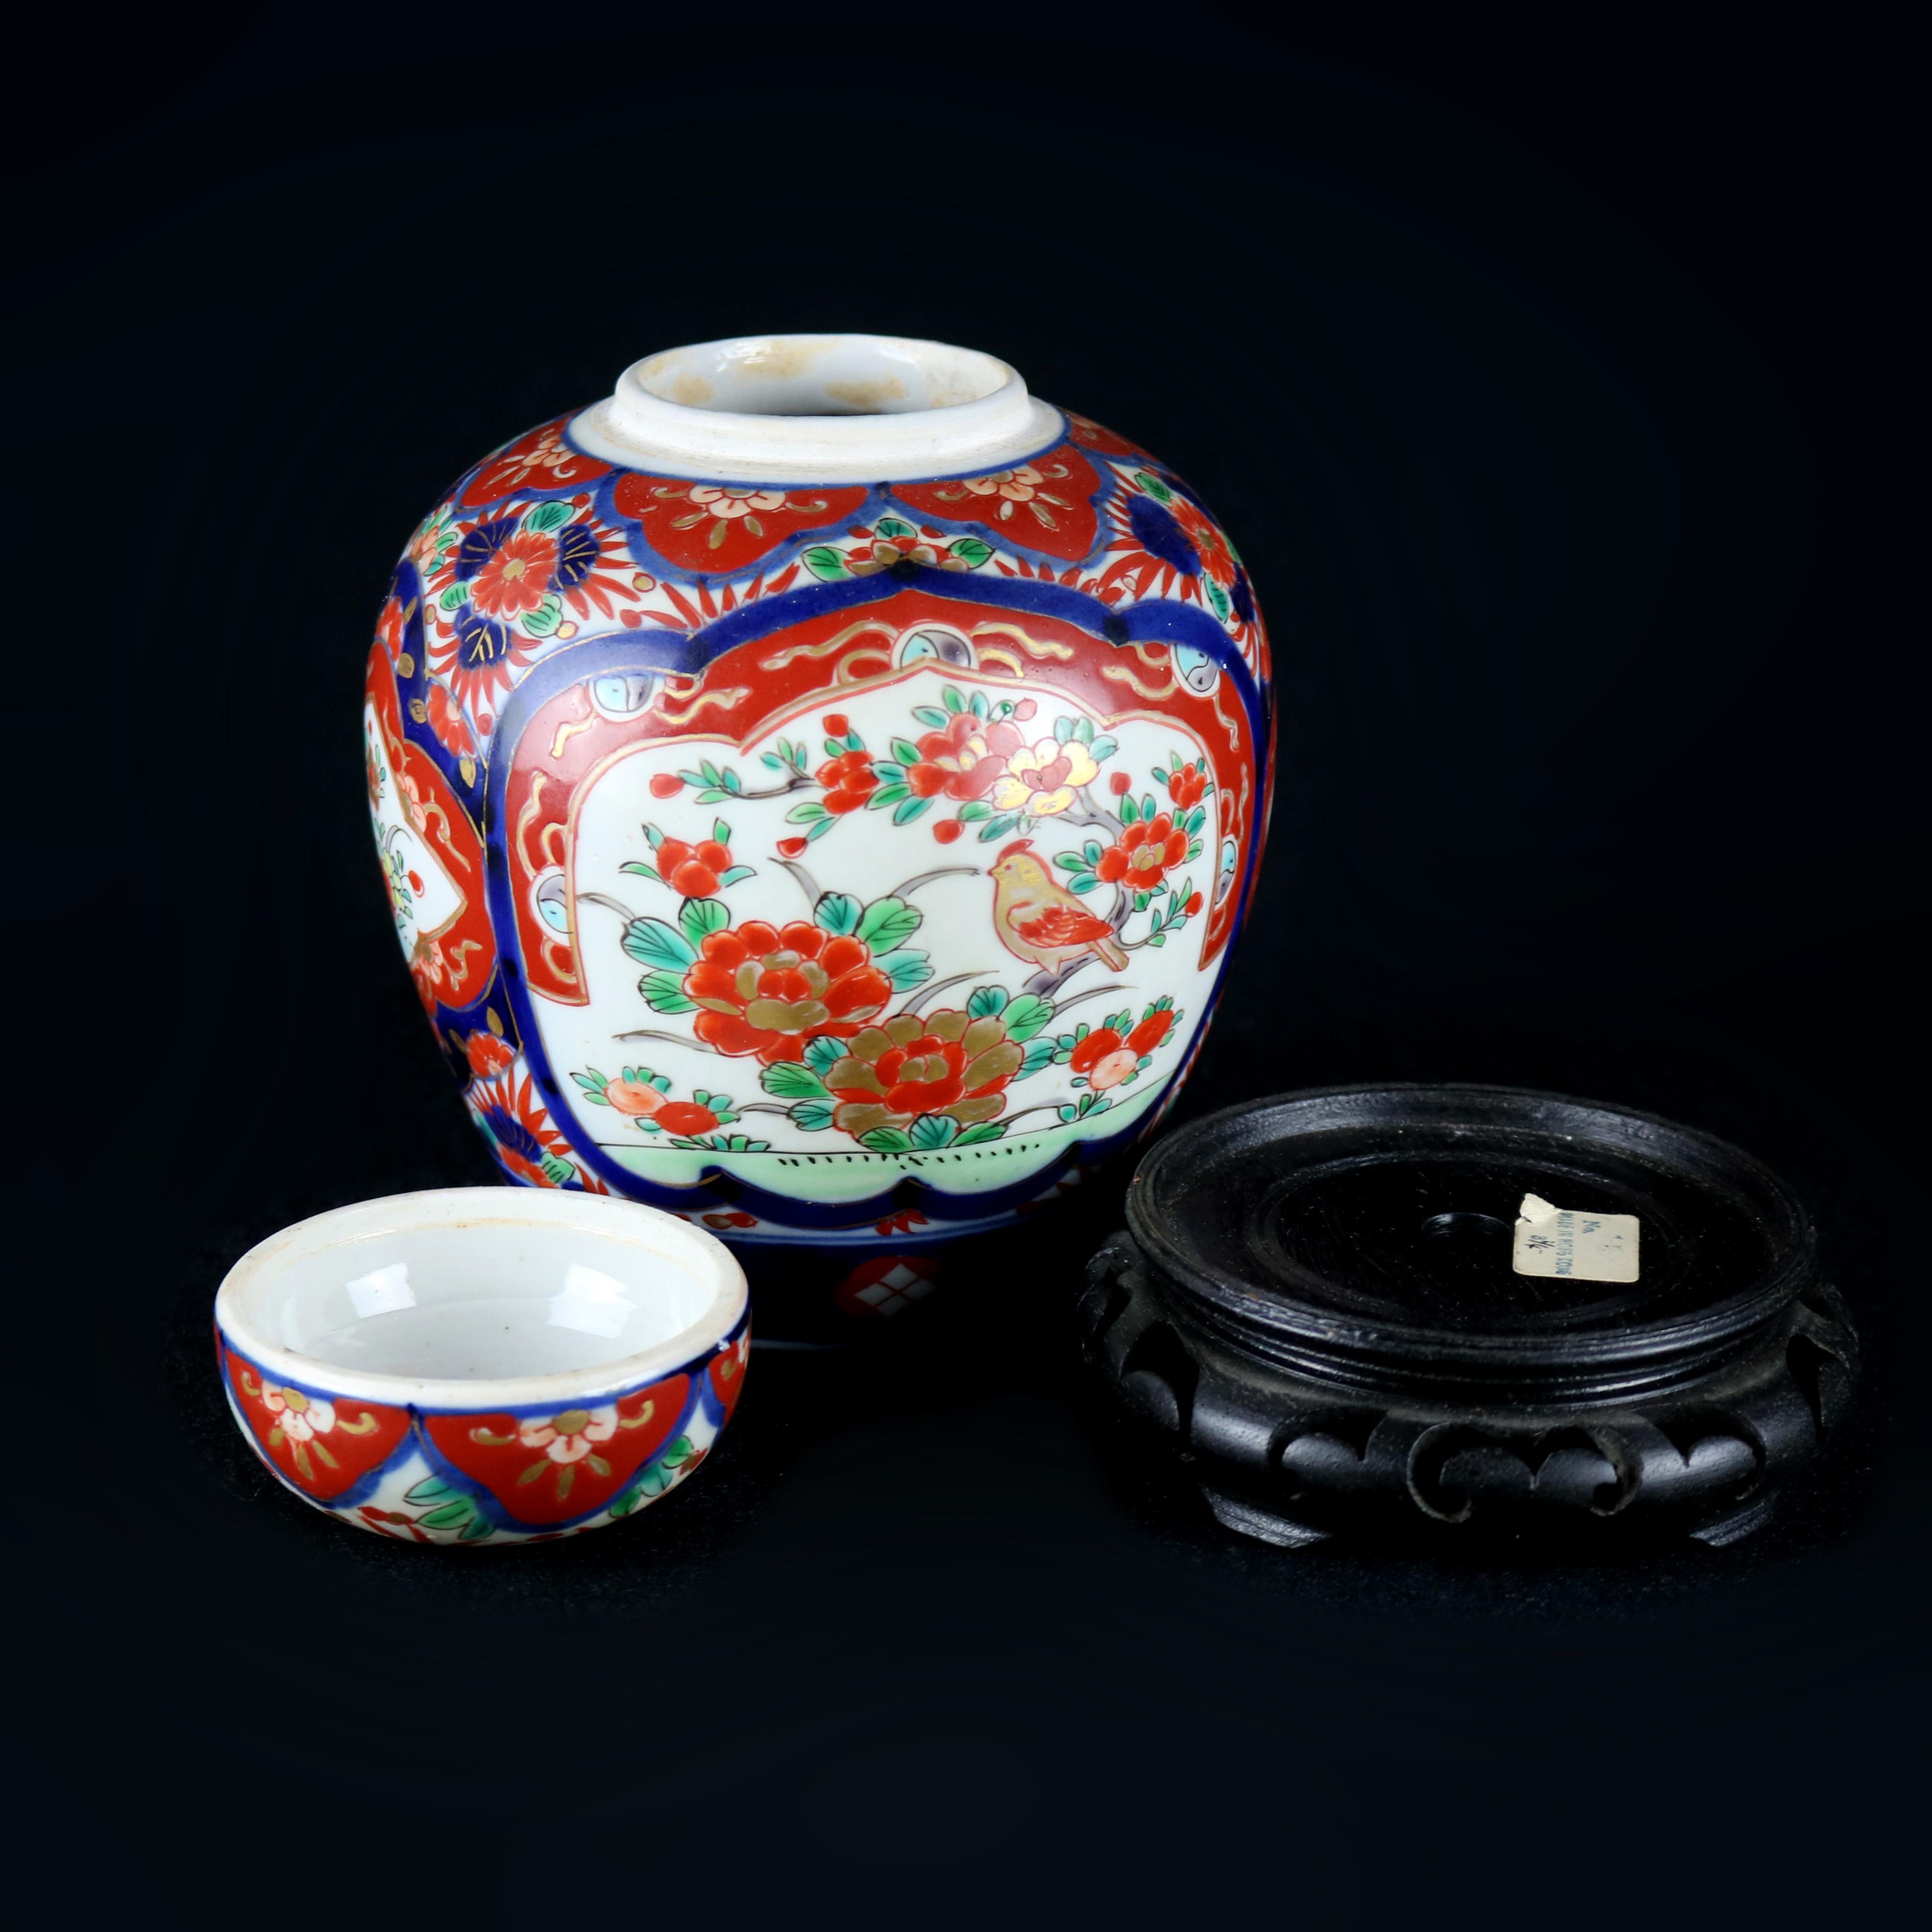 Fired Vintage Japanese Imari Enameled Porcelain Covered Ginger Jar, 20th Century